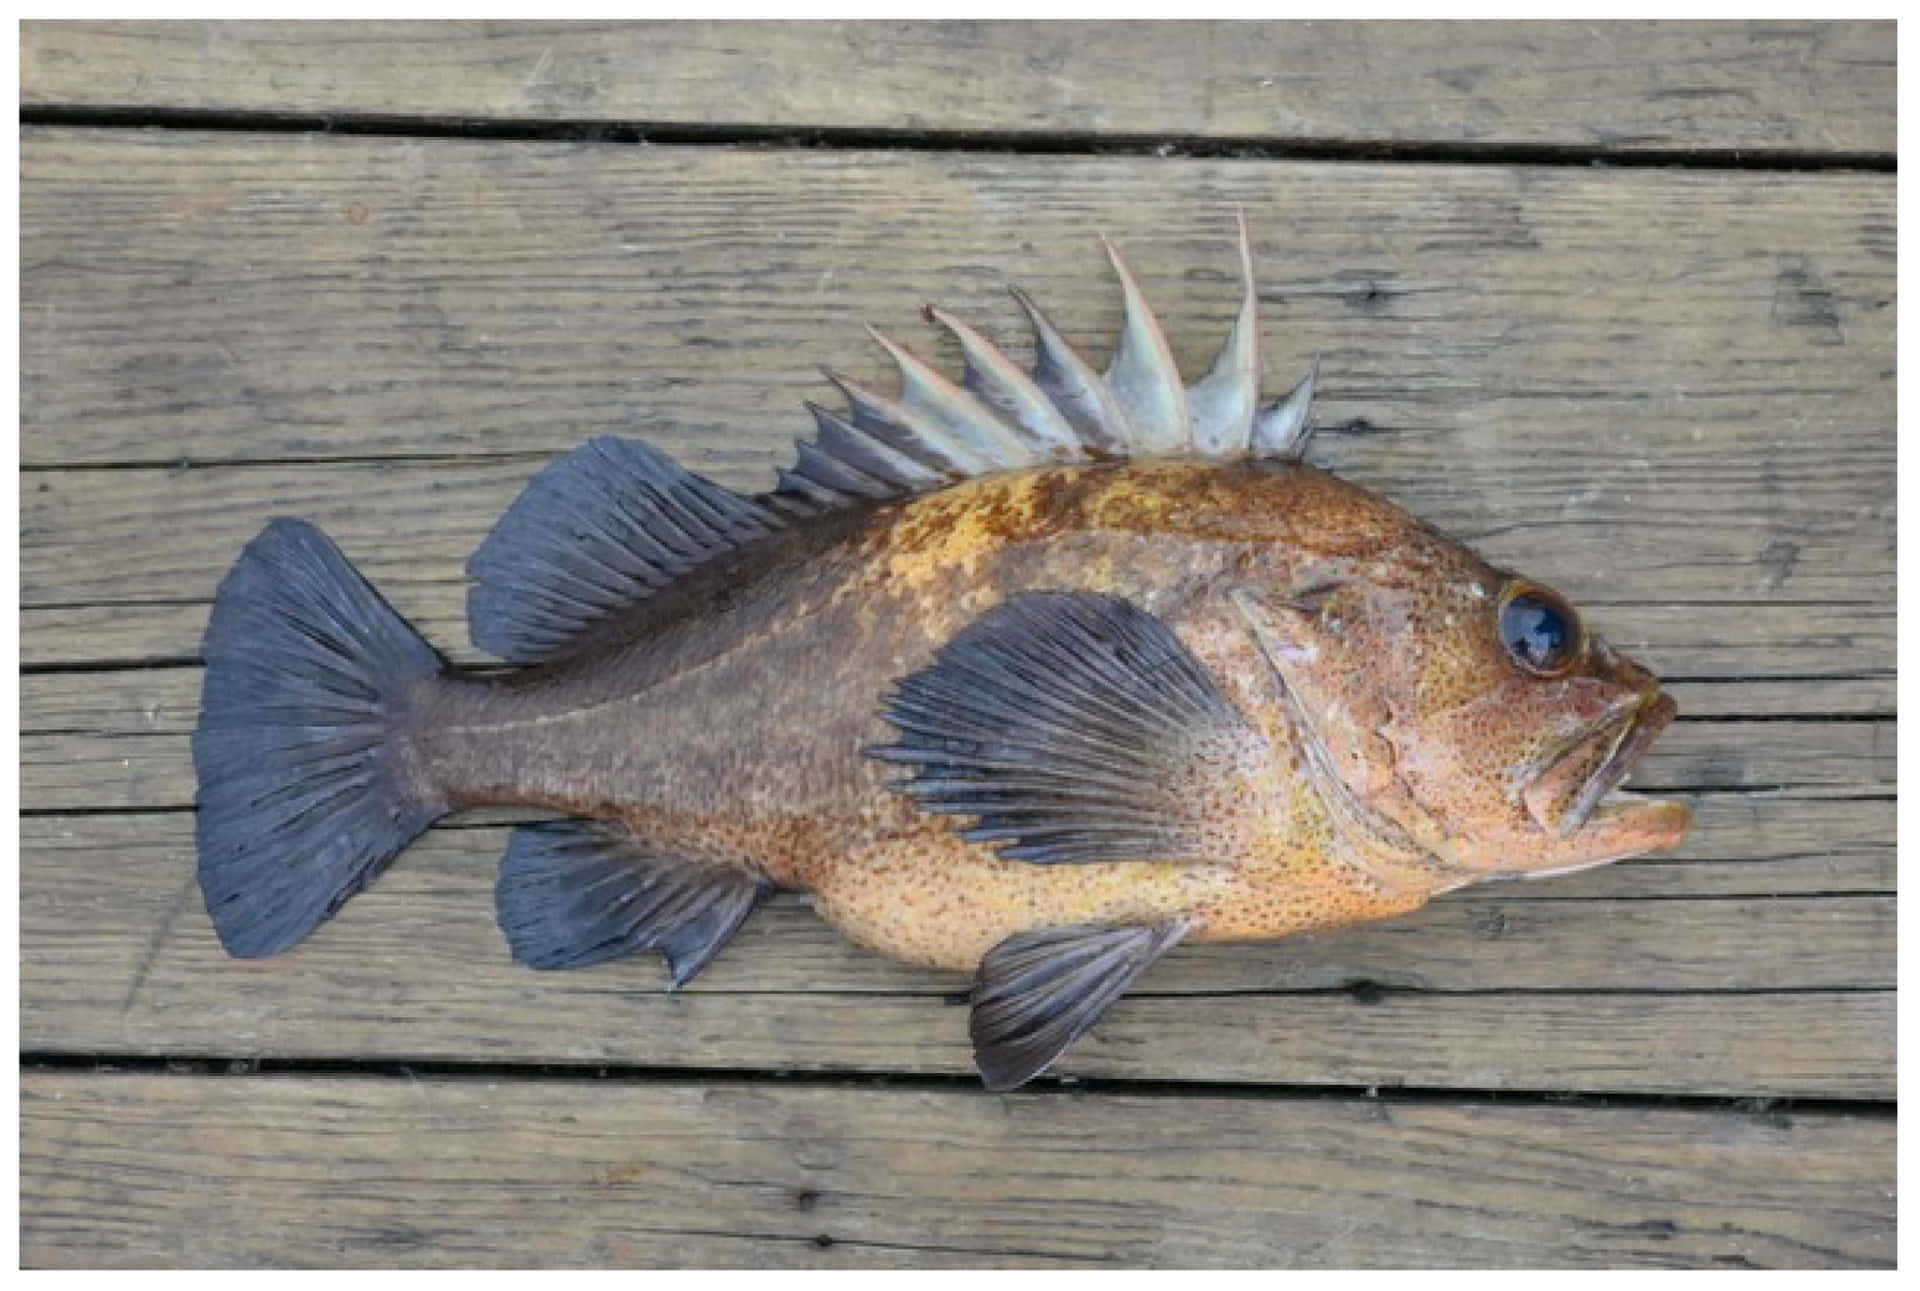 Quillback Rockfish On Wooden Deck.jpg Wallpaper